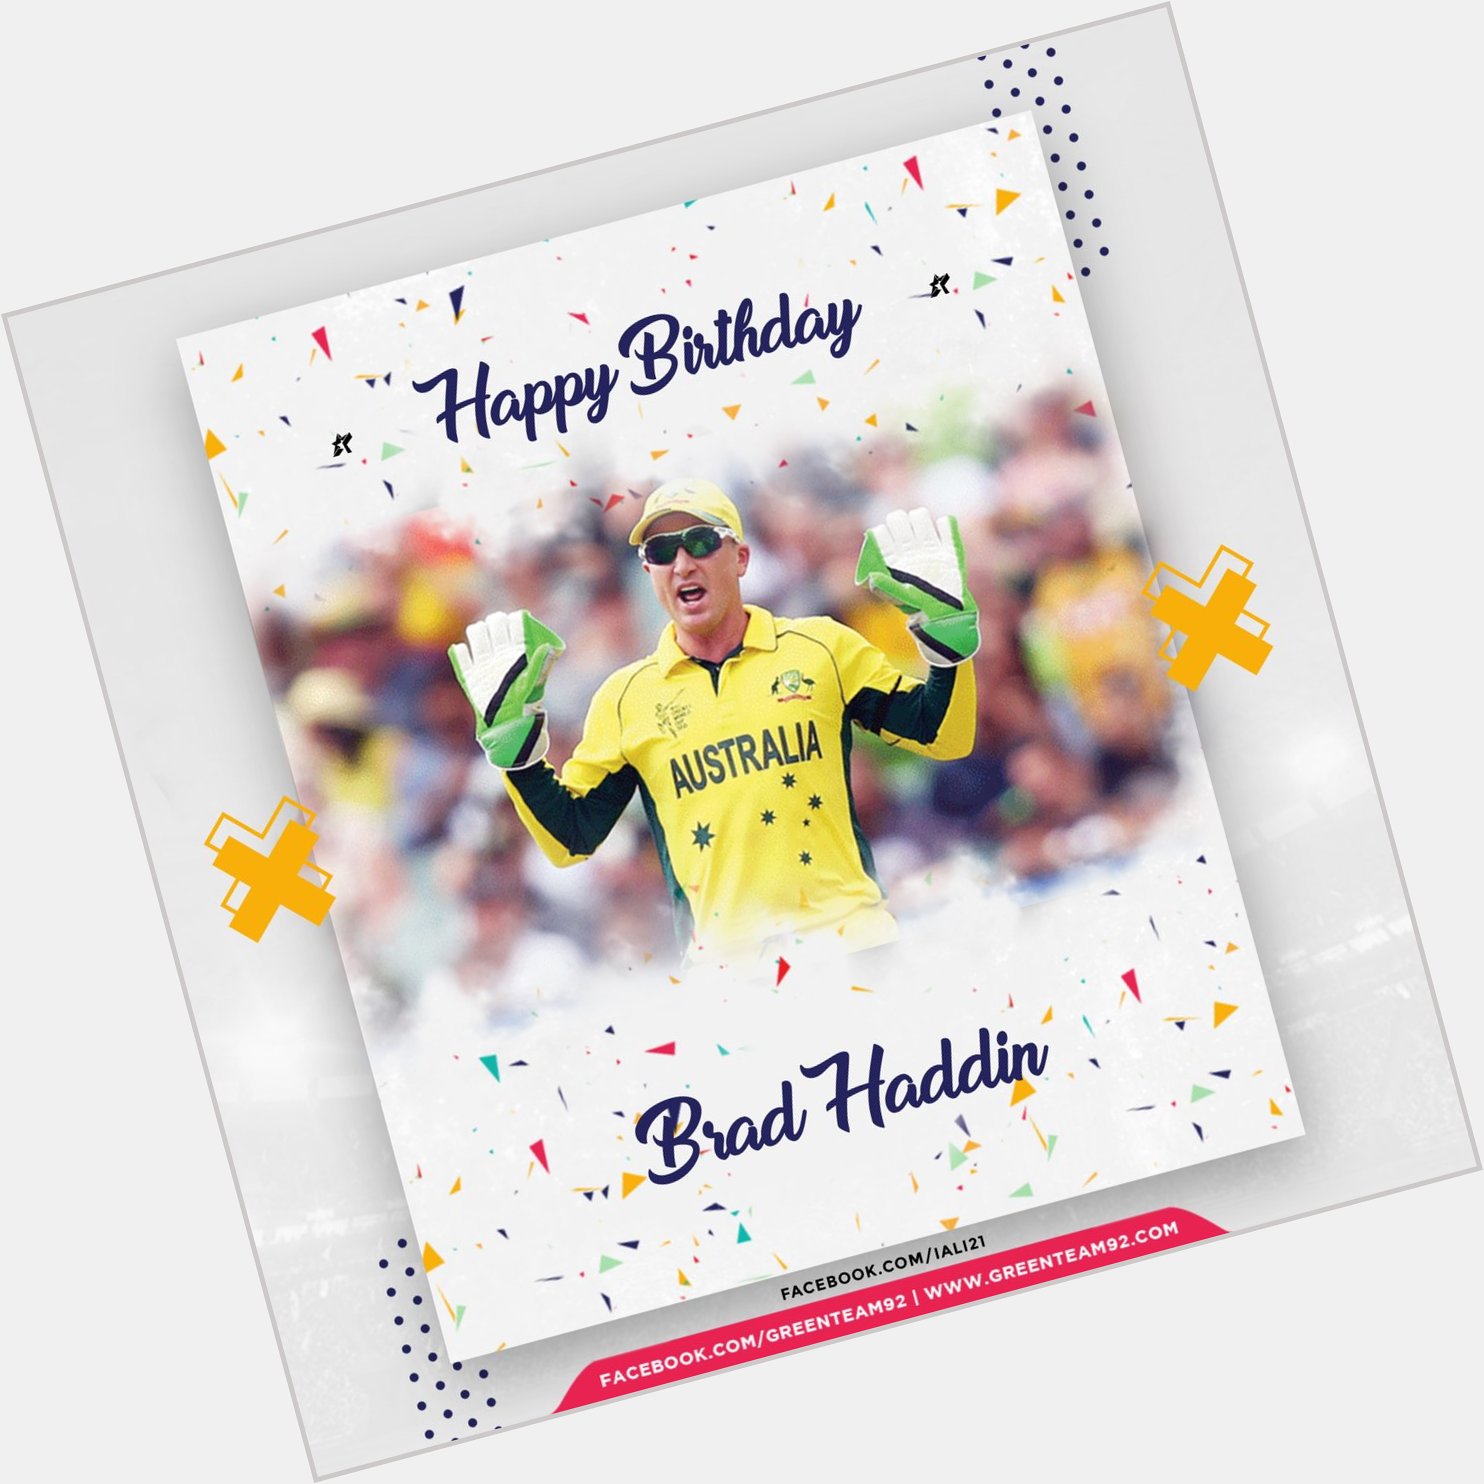 Happy 43rd Birthday to Brad Haddin! 6790 International runs 474 dismissals 2015 World Cup winner 